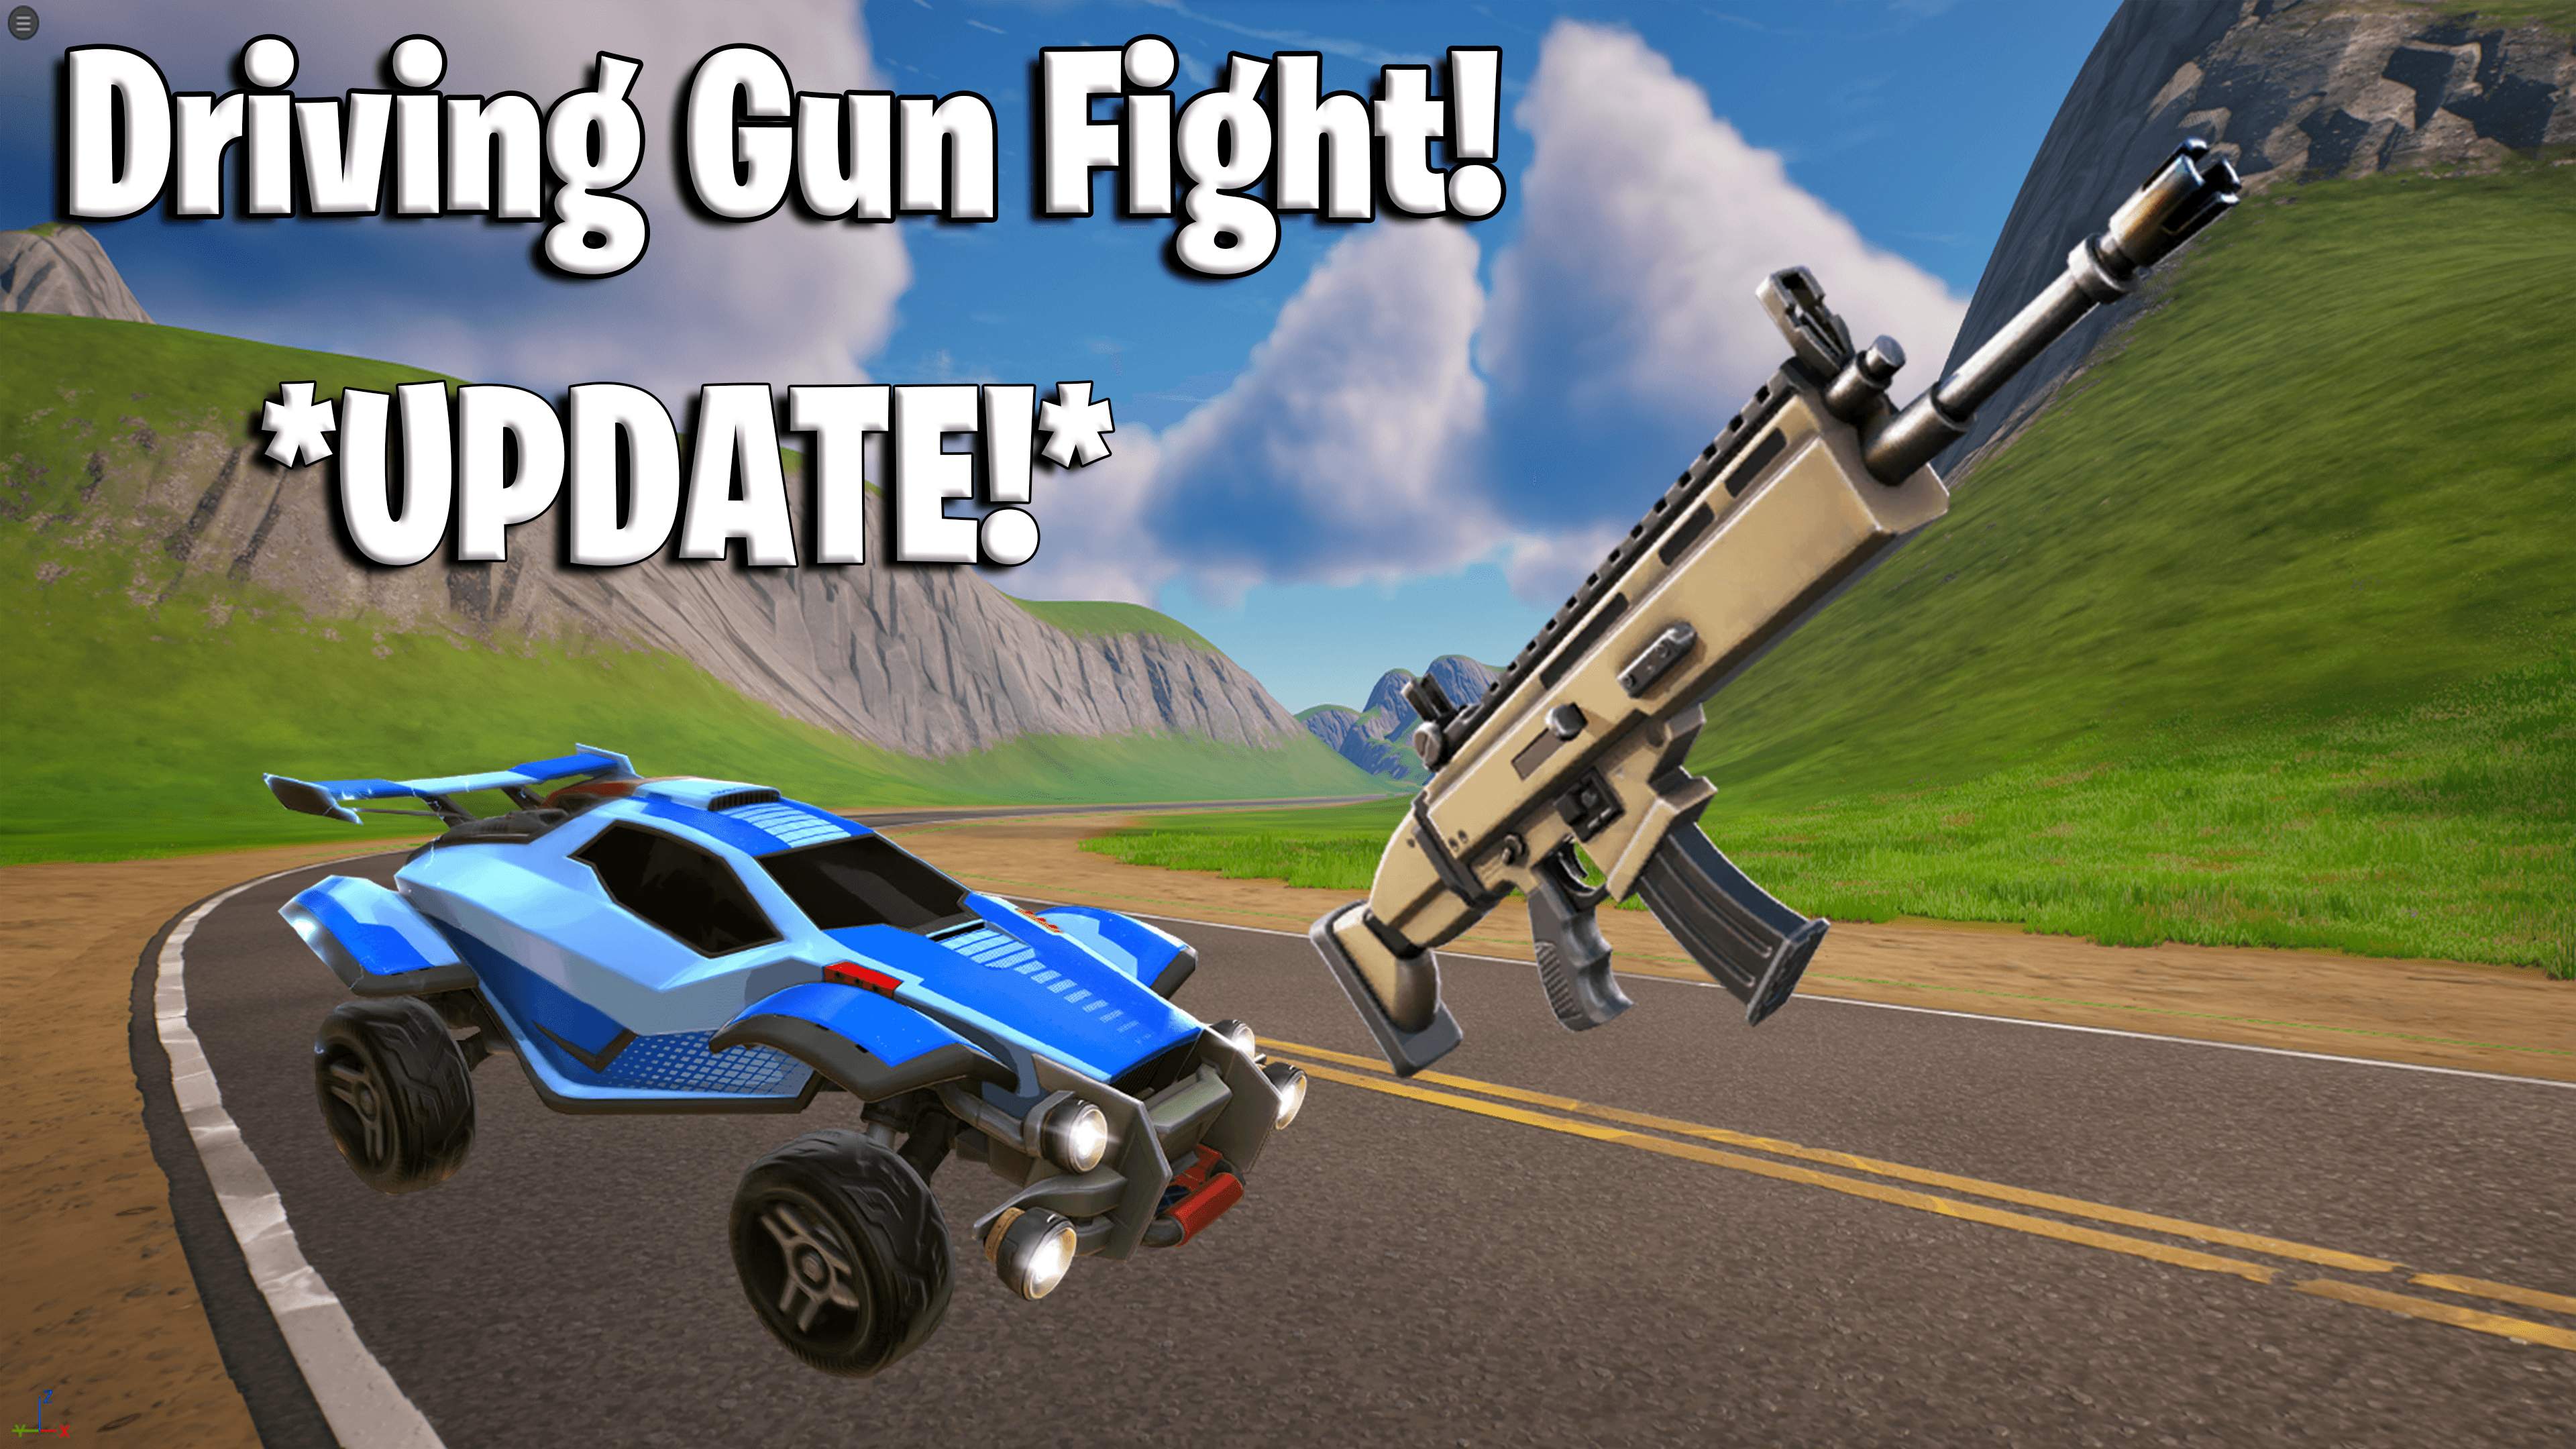 Driving Gun Fights beta!